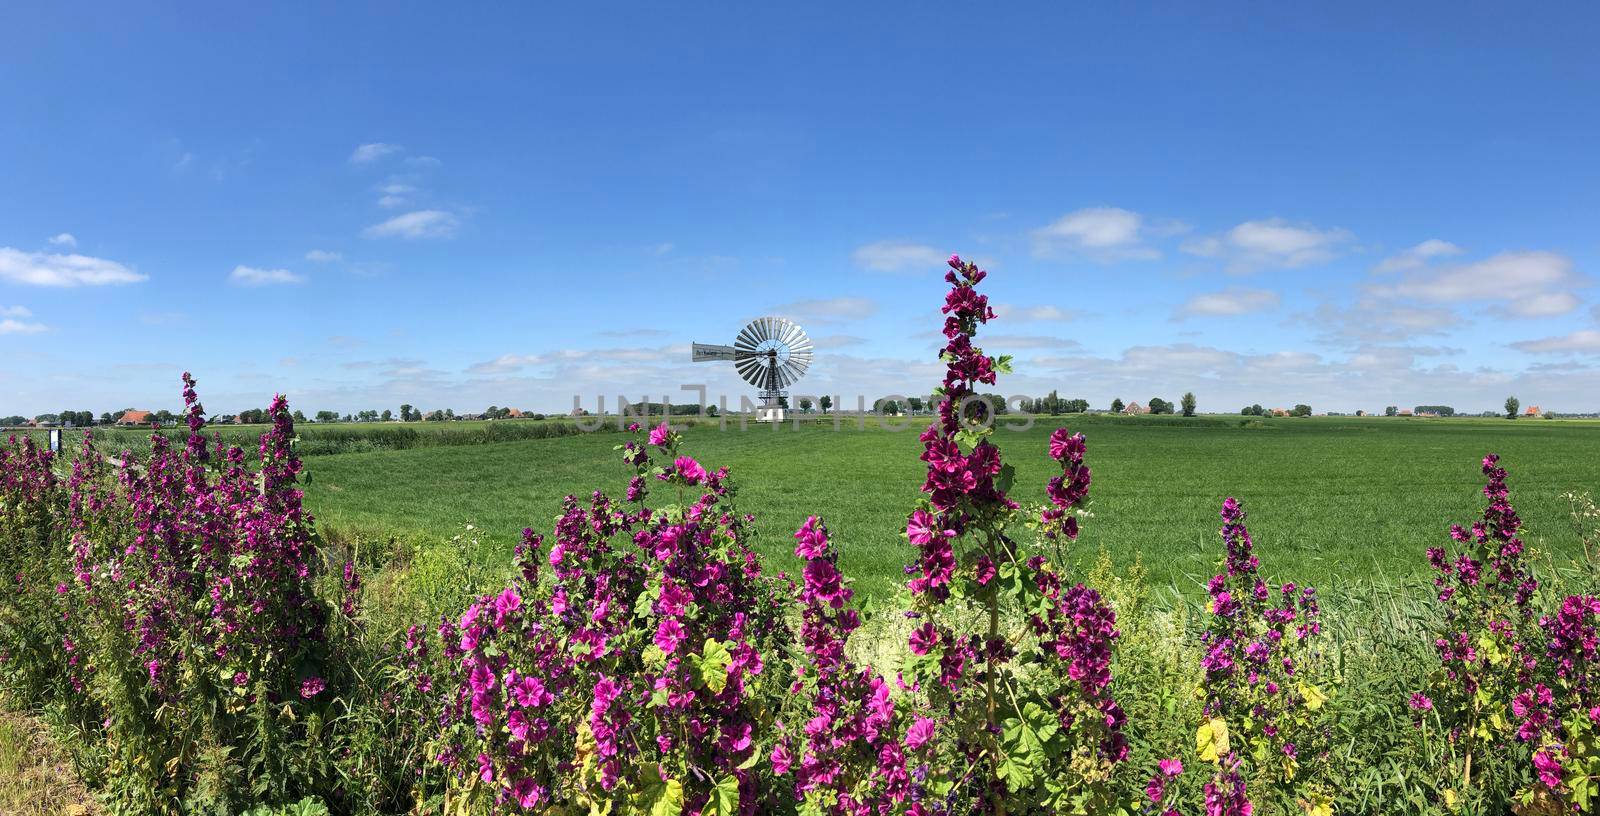 Panorama from a windmill around the village Boazum in Friesland The Netherlands